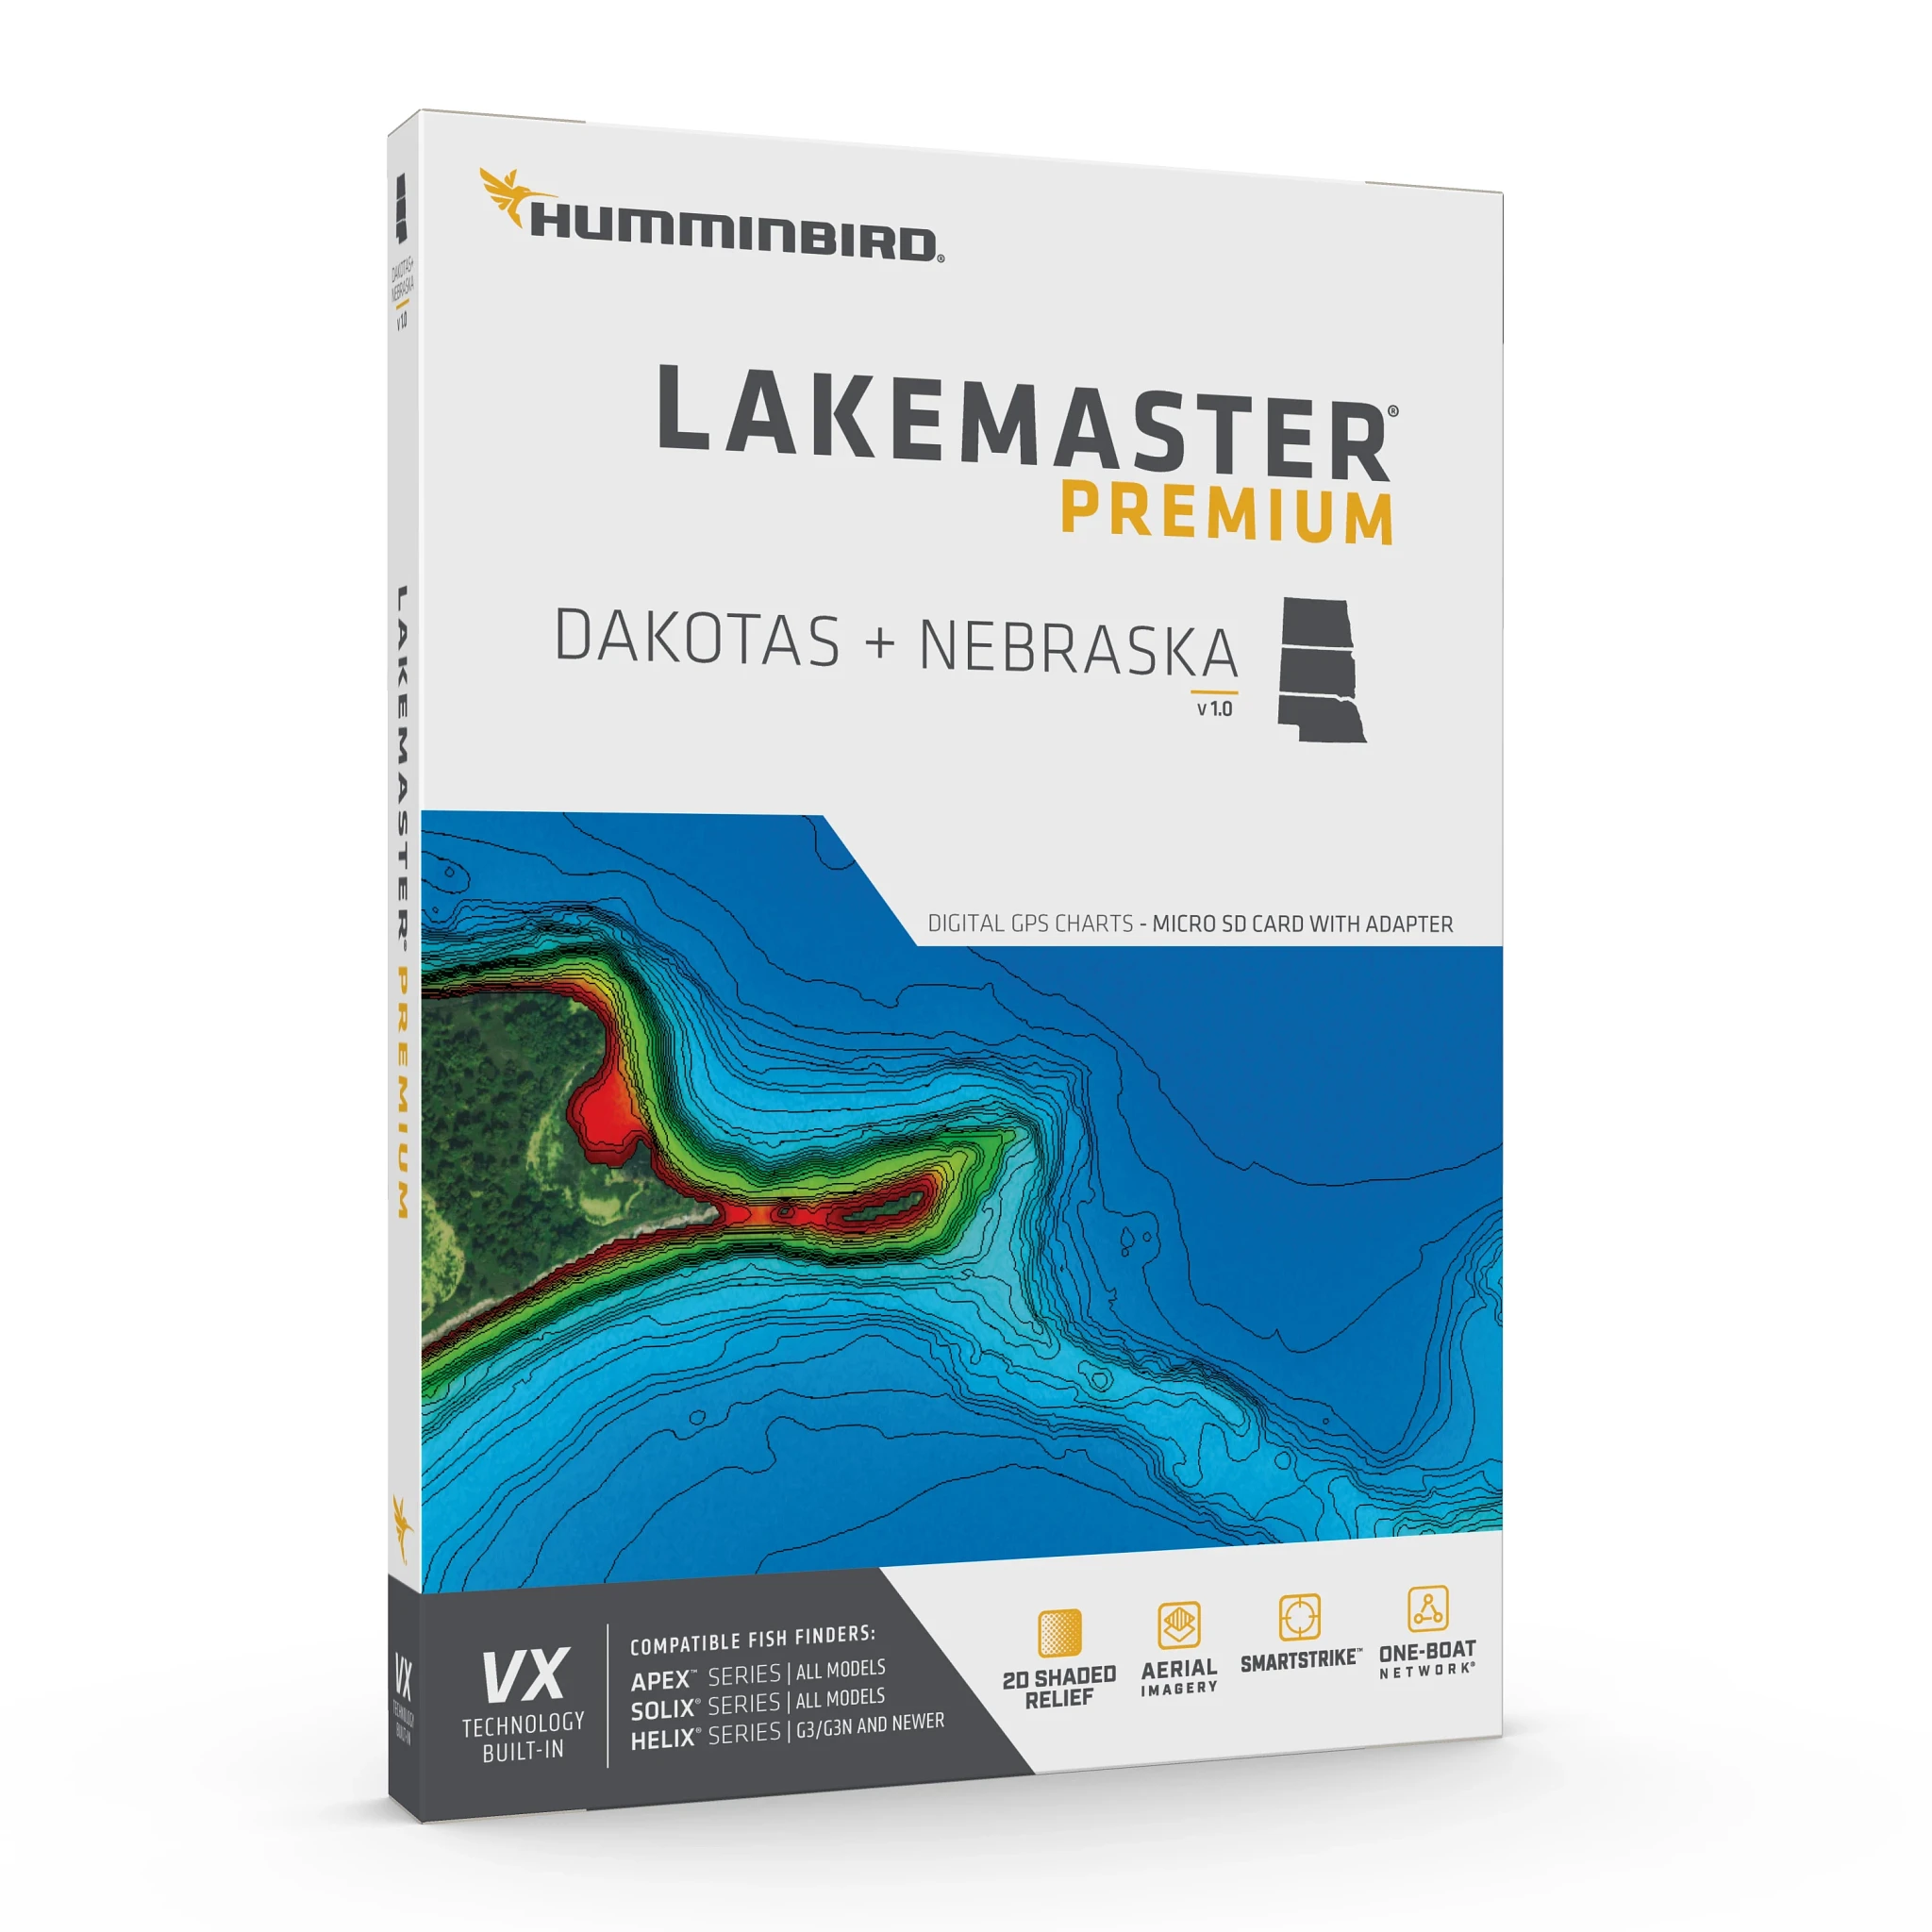 LakeMaster Premium - Dakotas + Nebraska Packaging